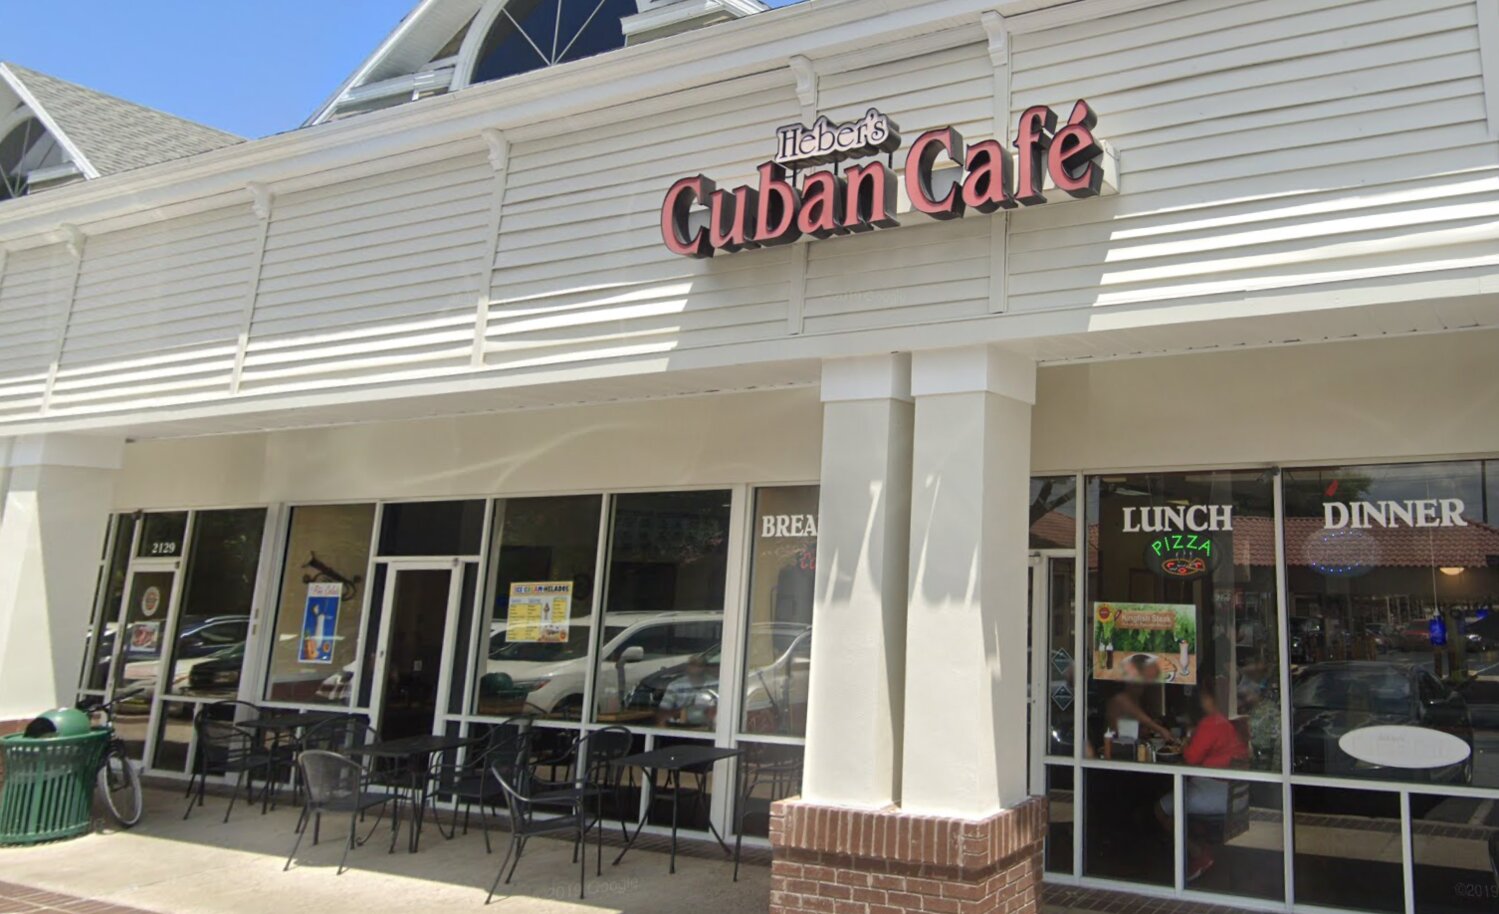 Heber's Cuban Cafe Apopka is located at 2131 East Semoran Boulevard in the Wekiva Riverwalk Shopping Center.